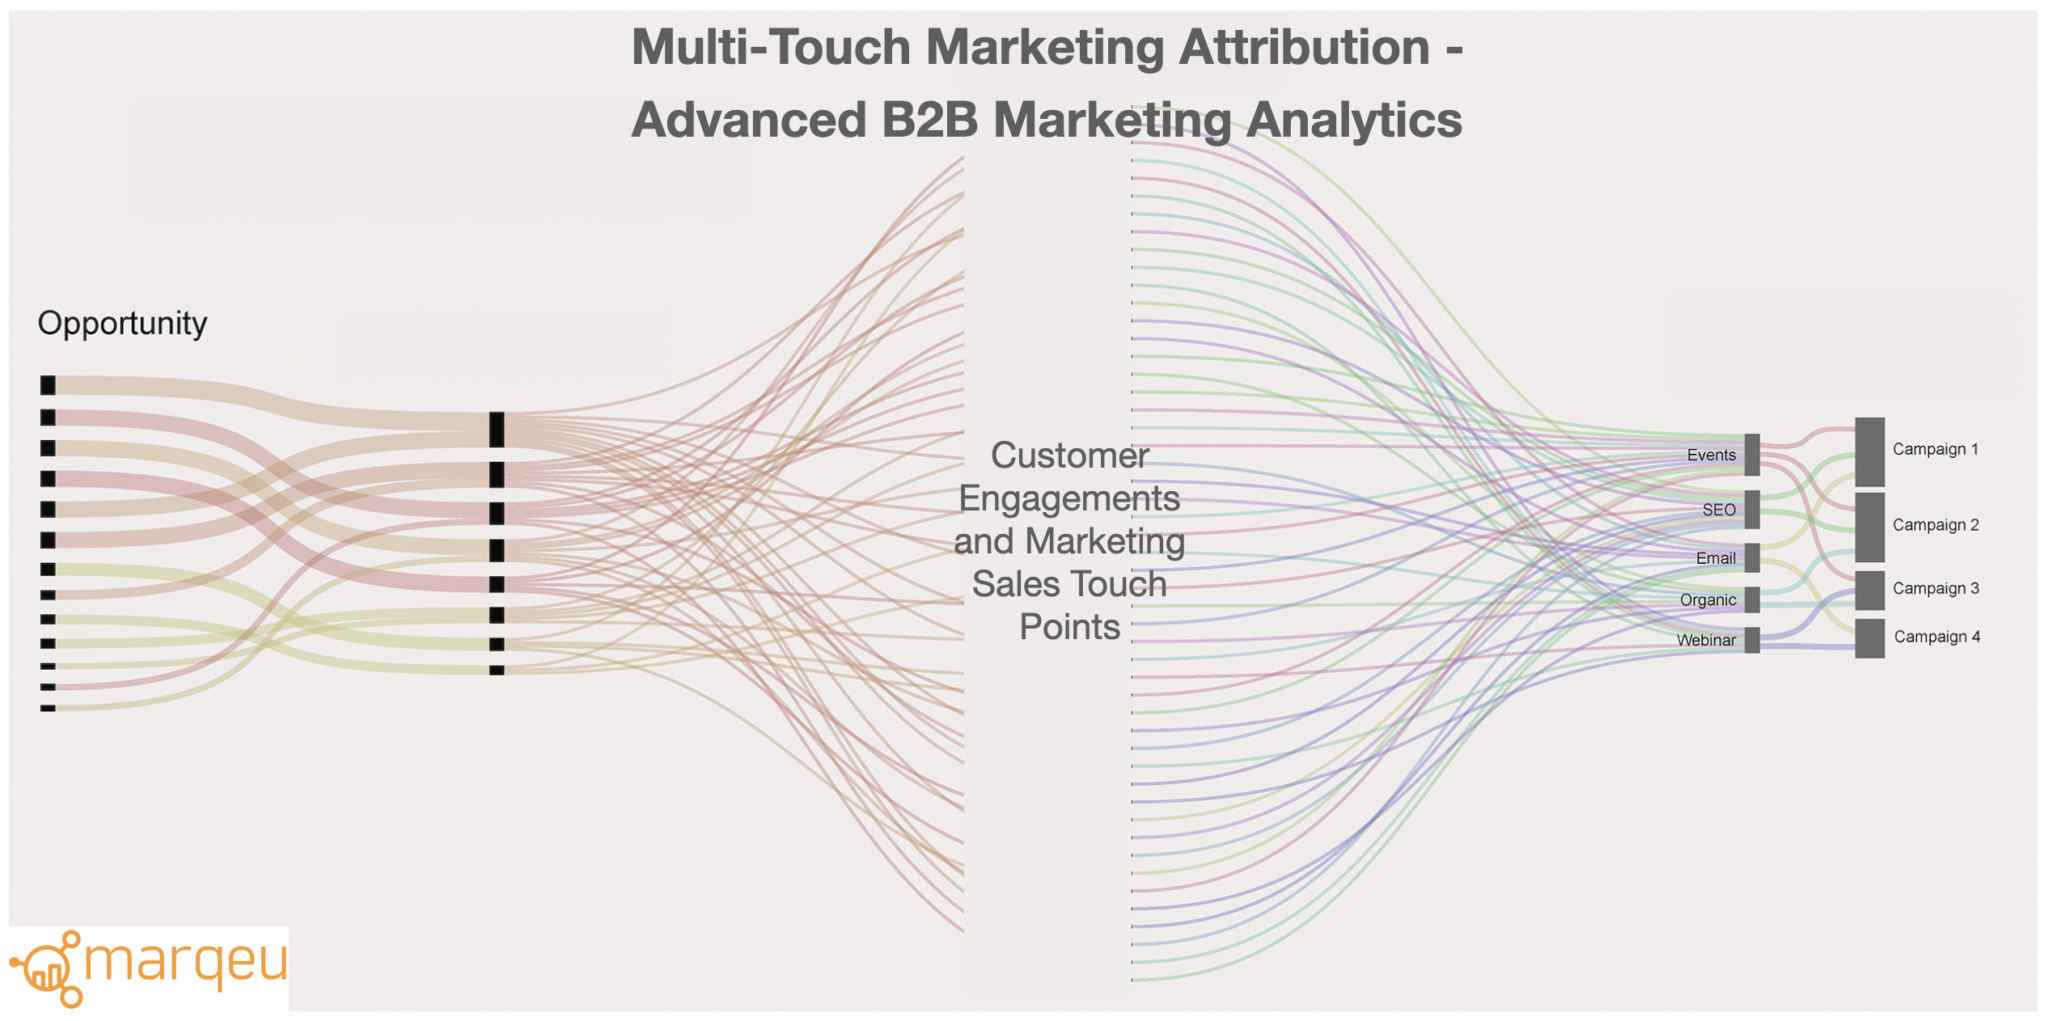 Marketing Attribution – Beginning of a Data Journey